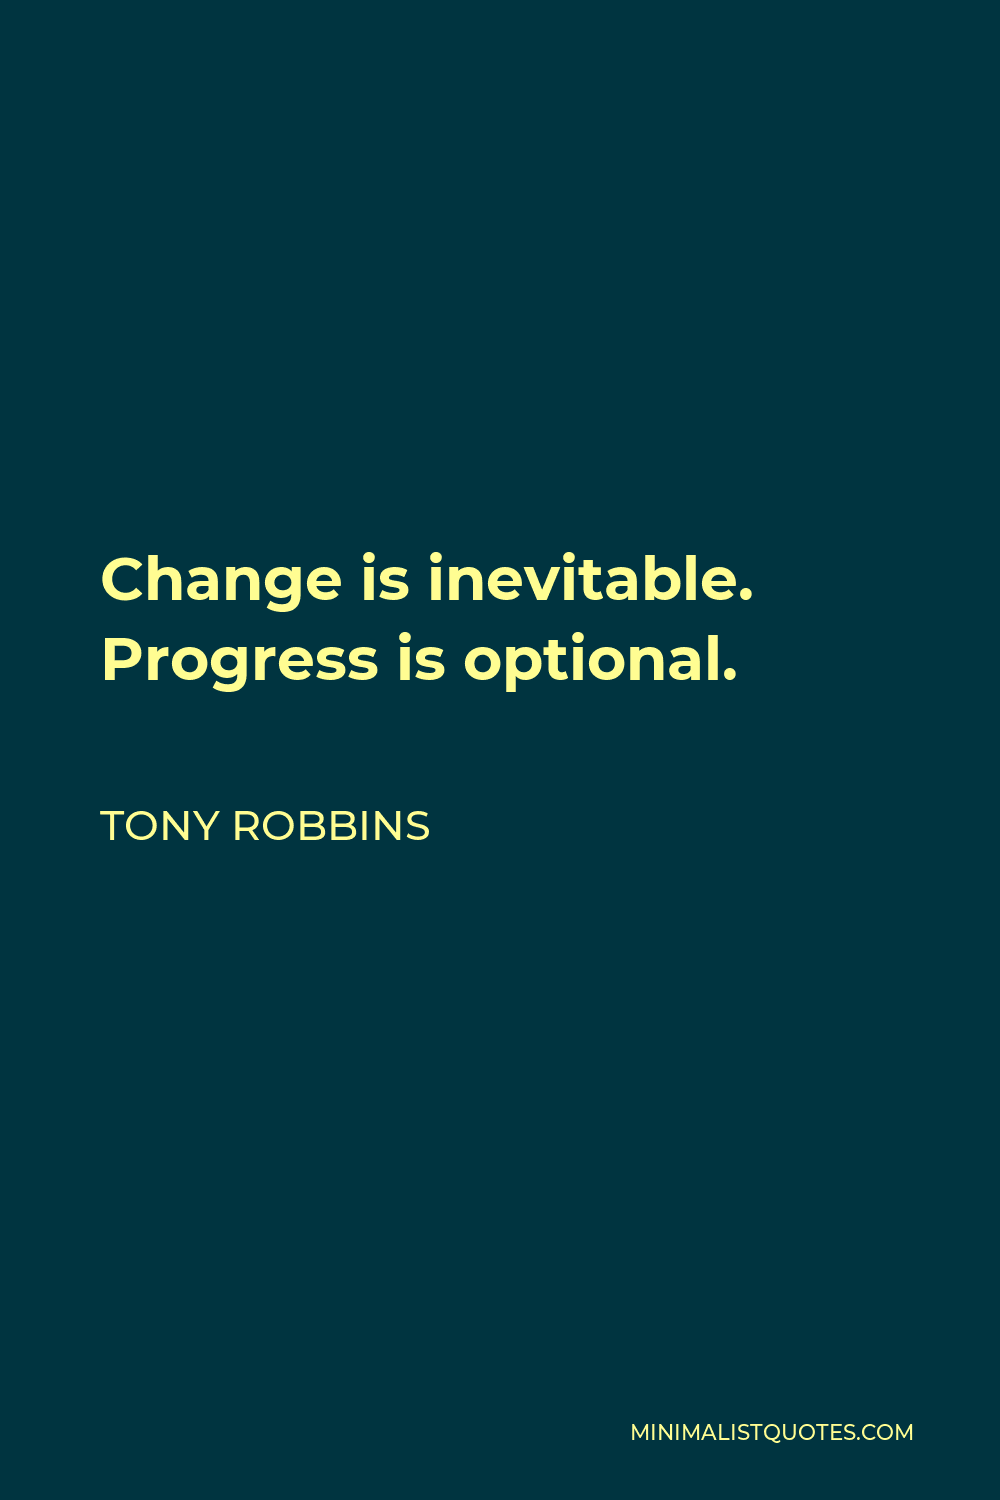 Tony Robbins Quote - Change is inevitable. Progress is optional.